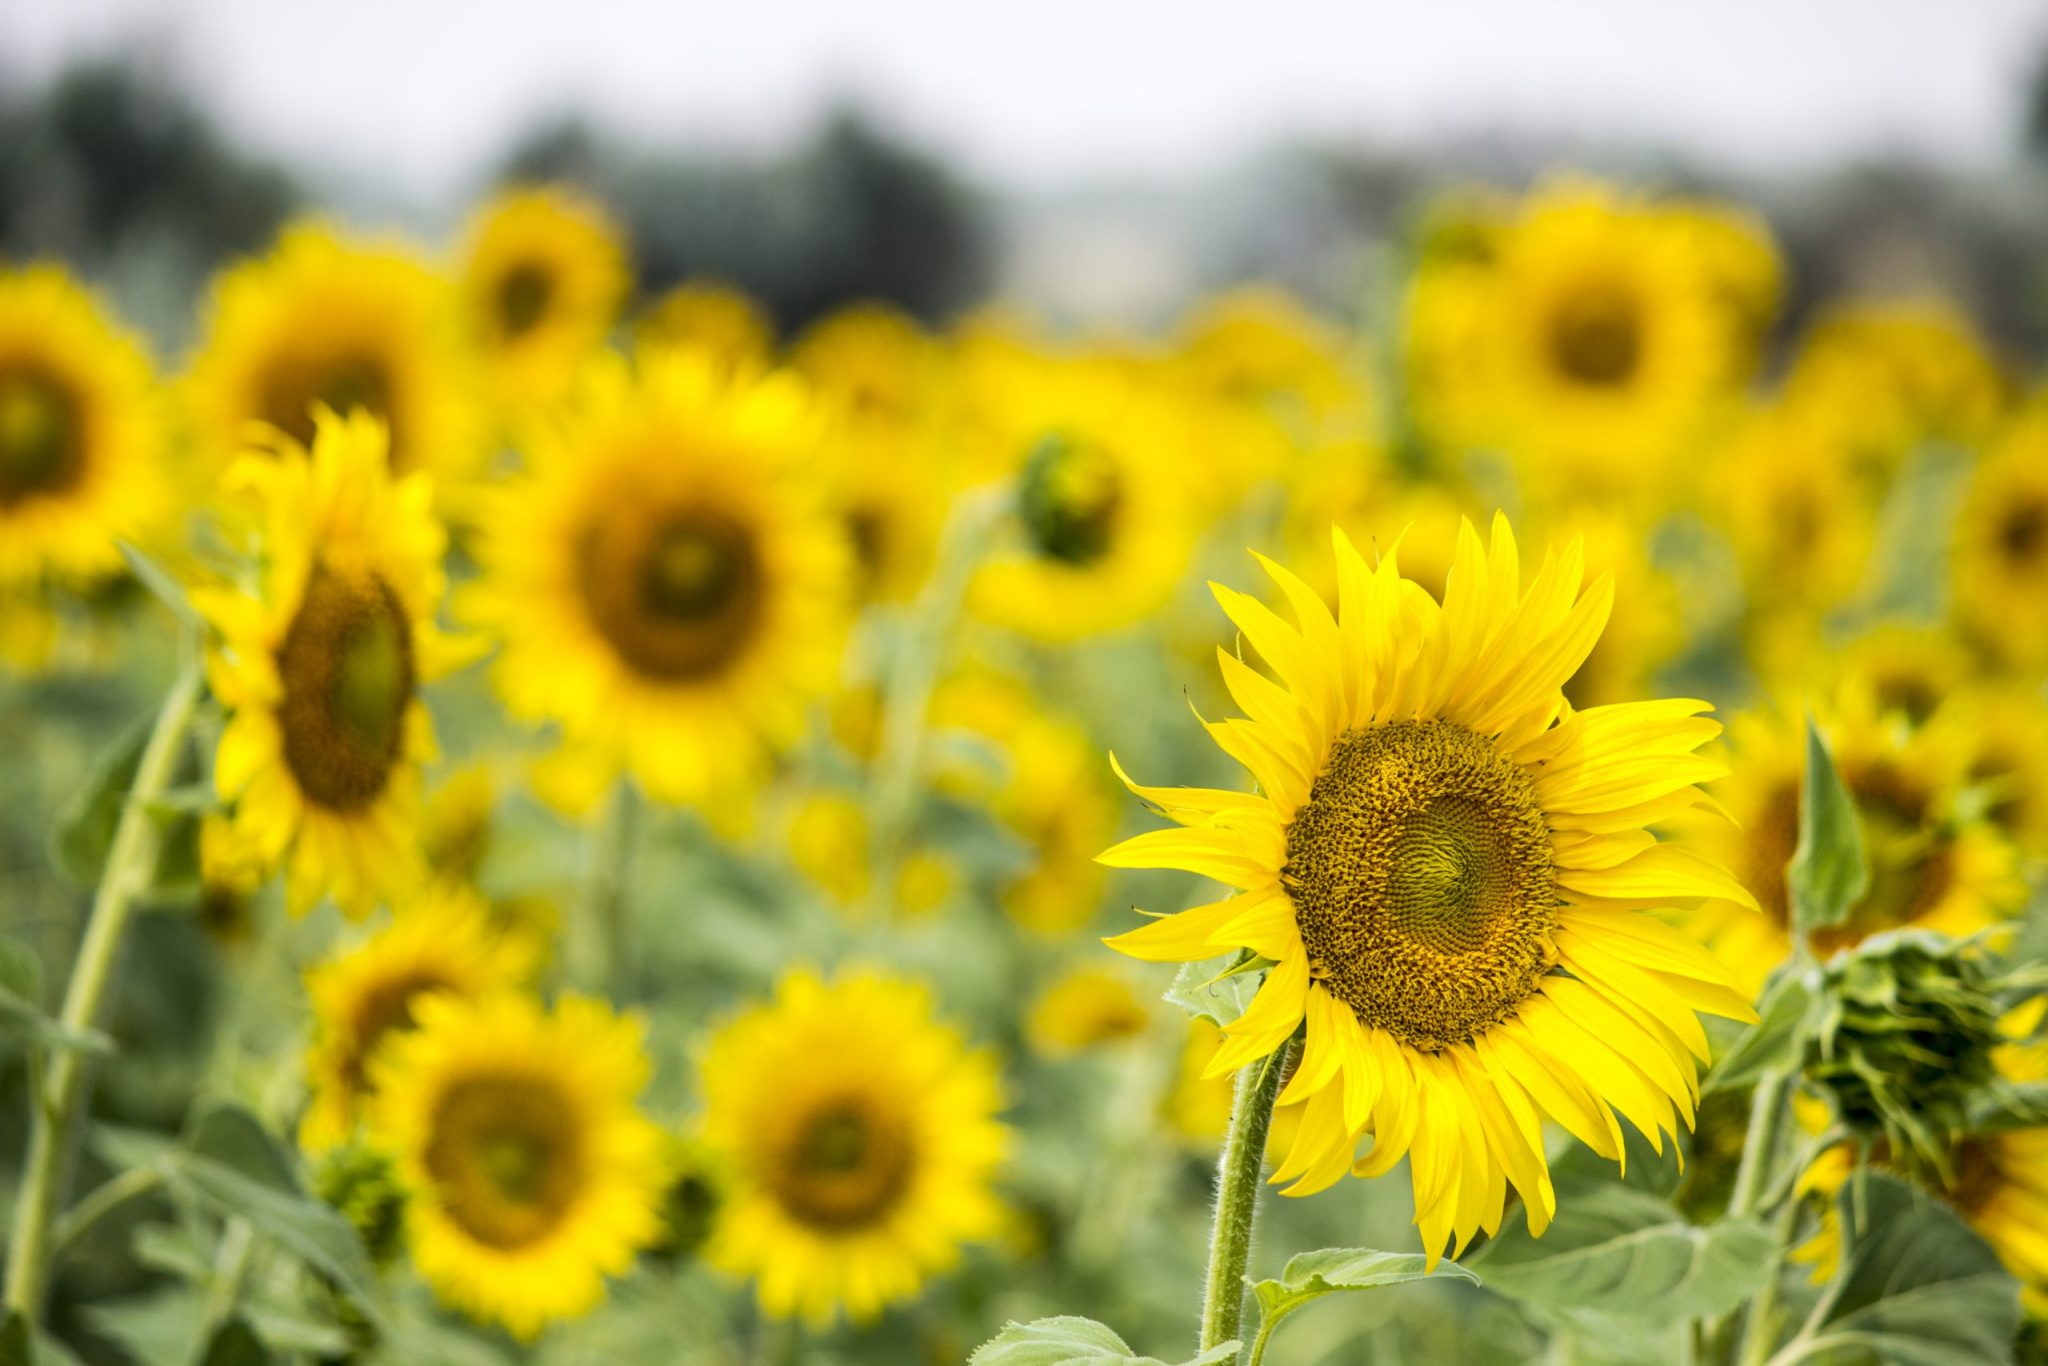 U Pick Sunflower Fields in Indiana